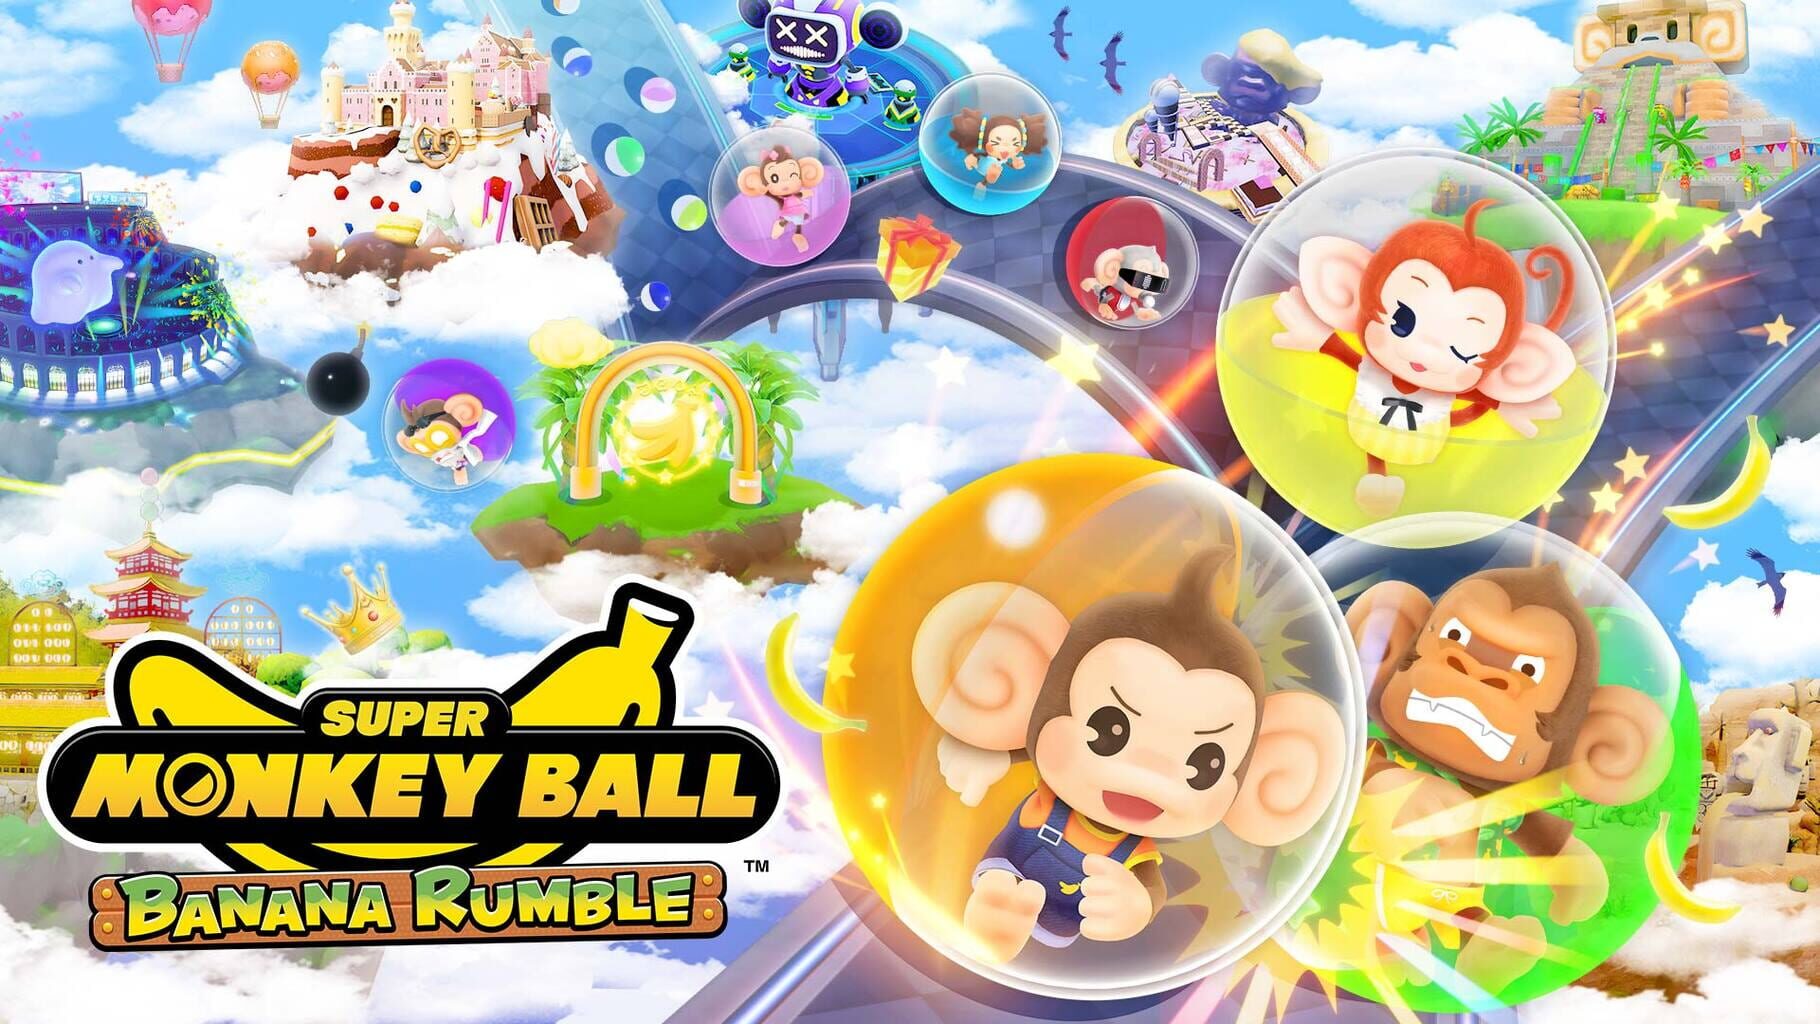 Artwork for Super Monkey Ball: Banana Rumble